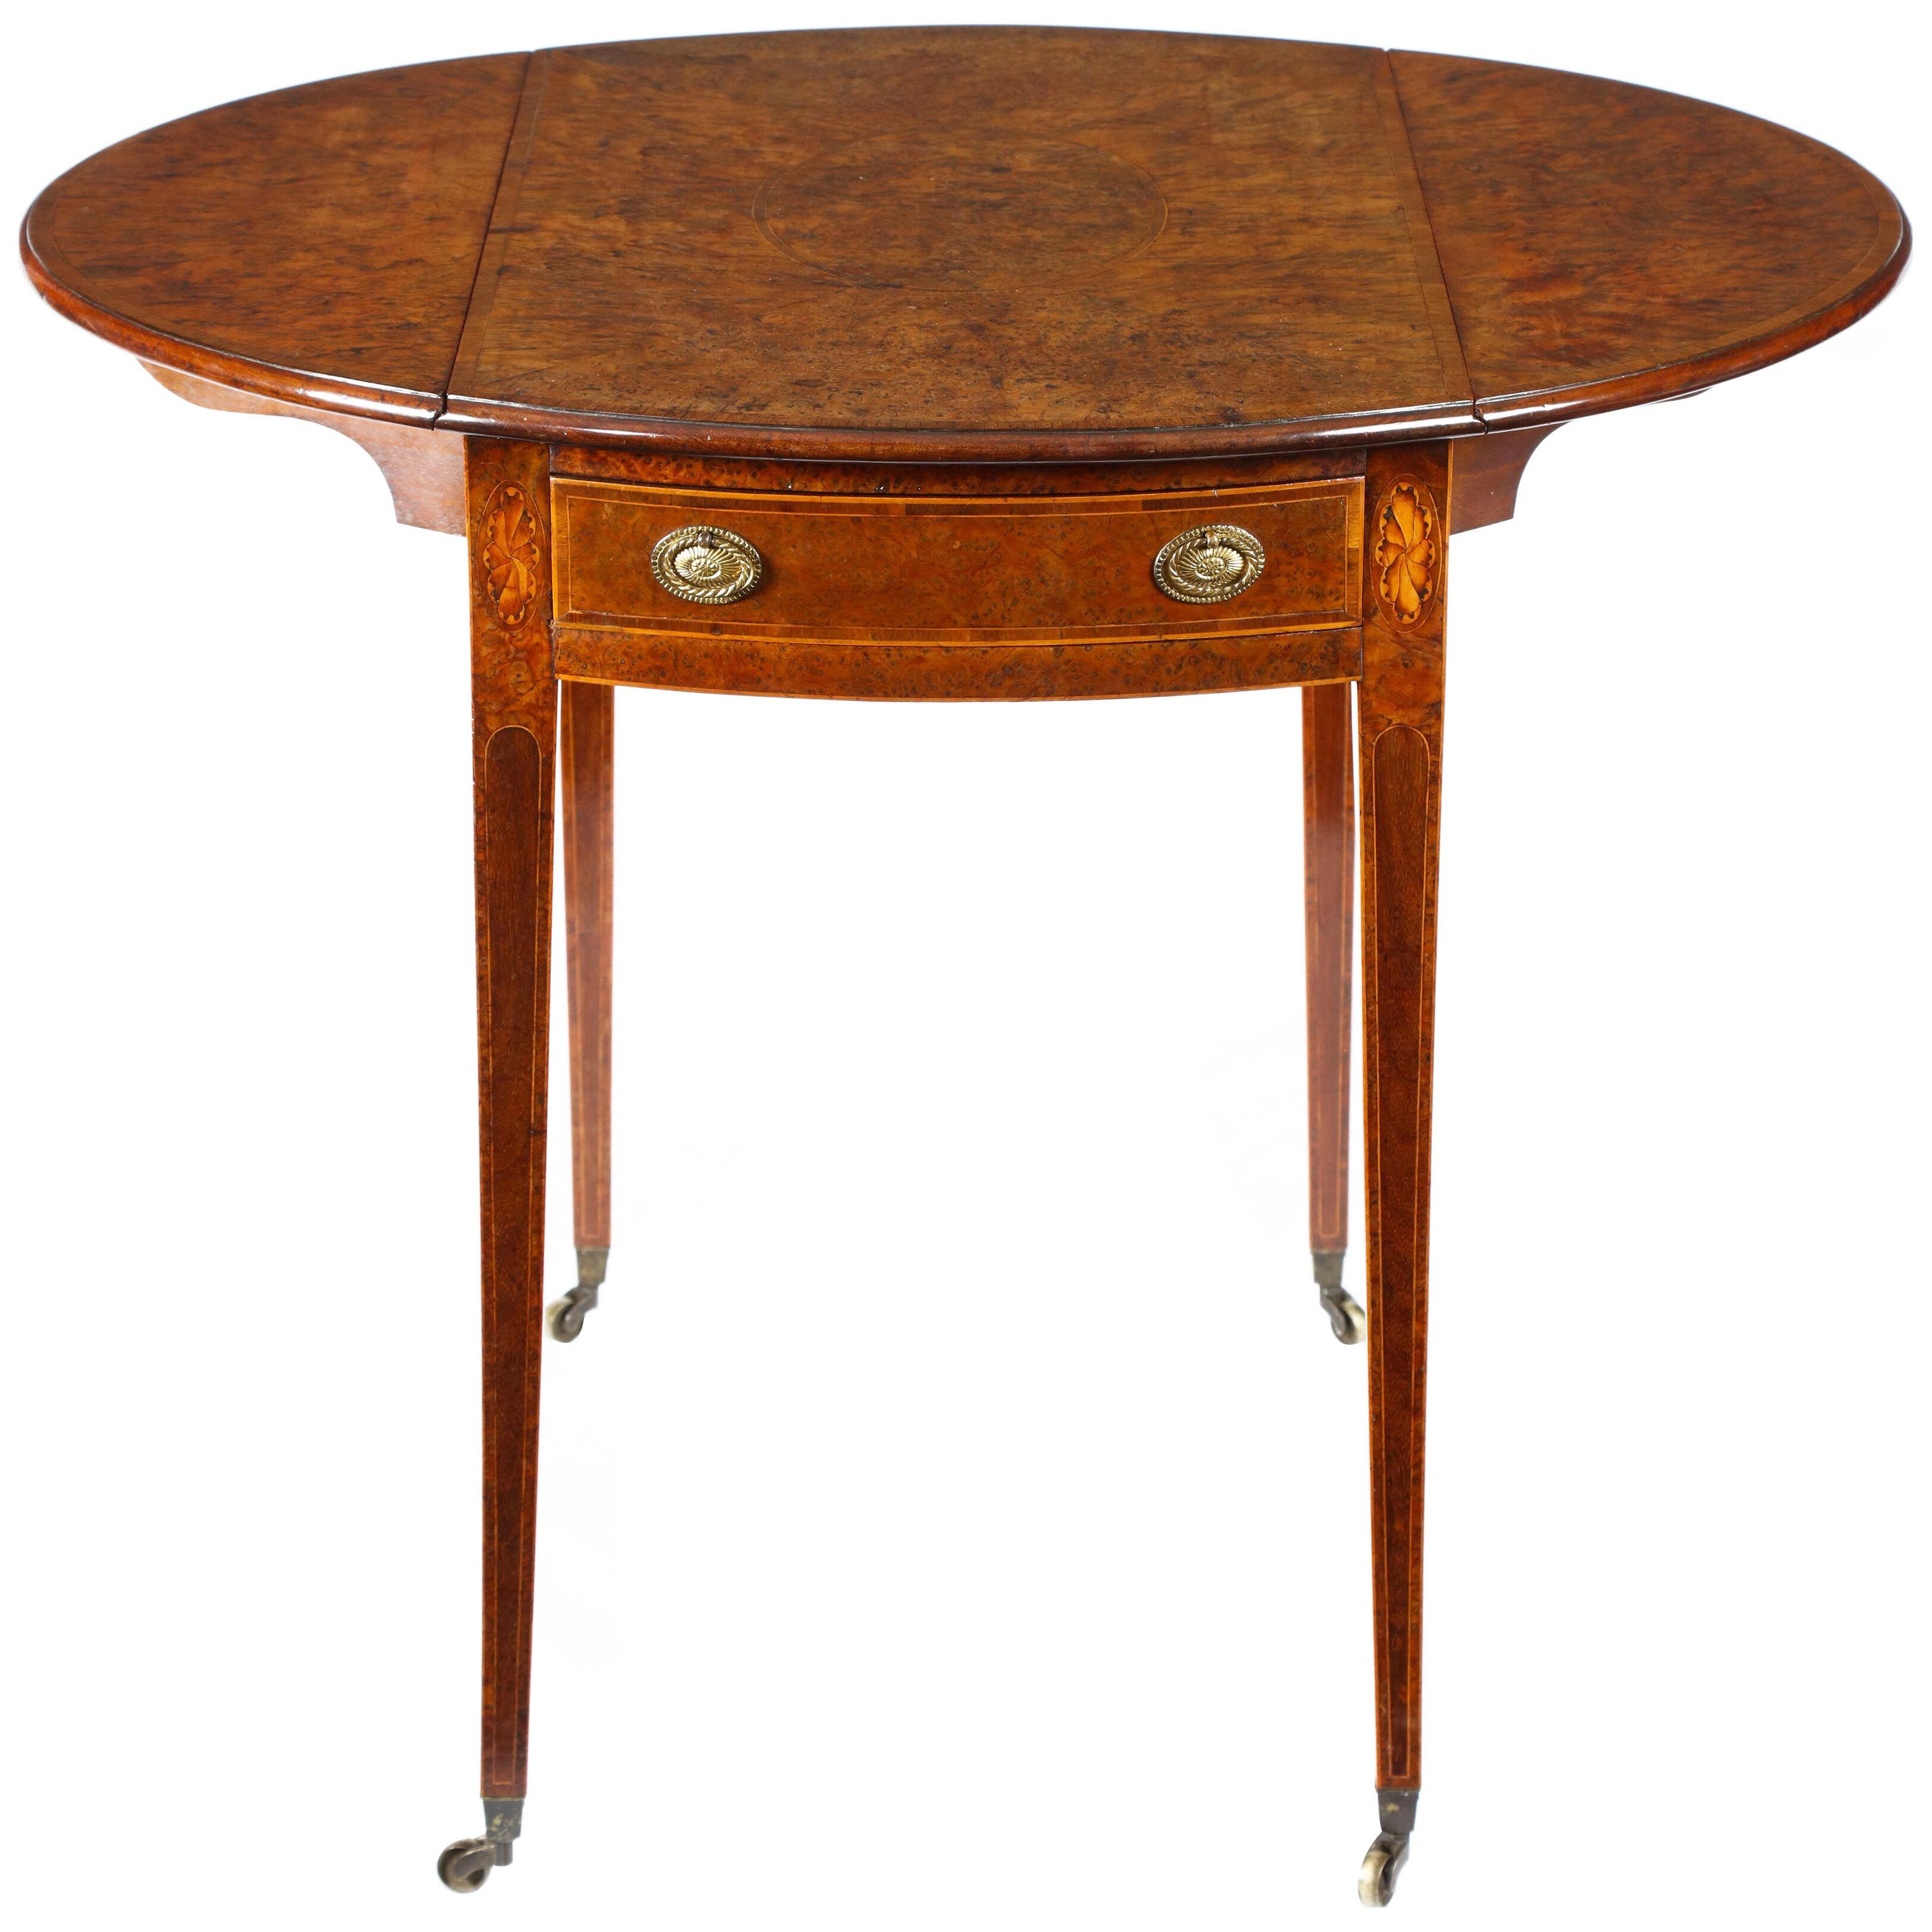 George III burr yew oval pembroke table